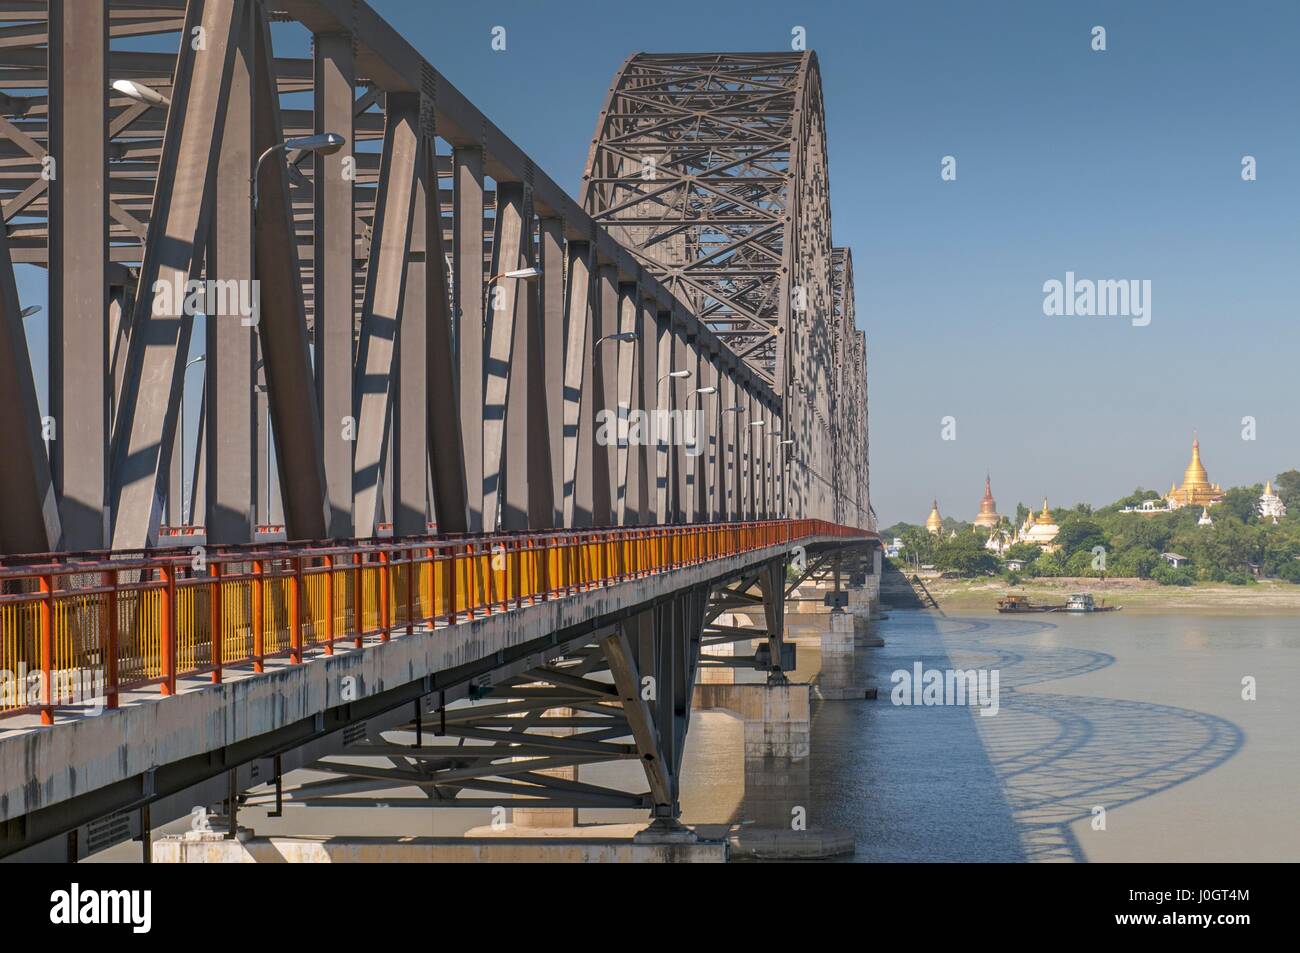 Irrawaddy (or Yadanabon) Bridge over the Irrawaddy River, Sagaing, near Mandalay, Myanmar (Burma). Stock Photo